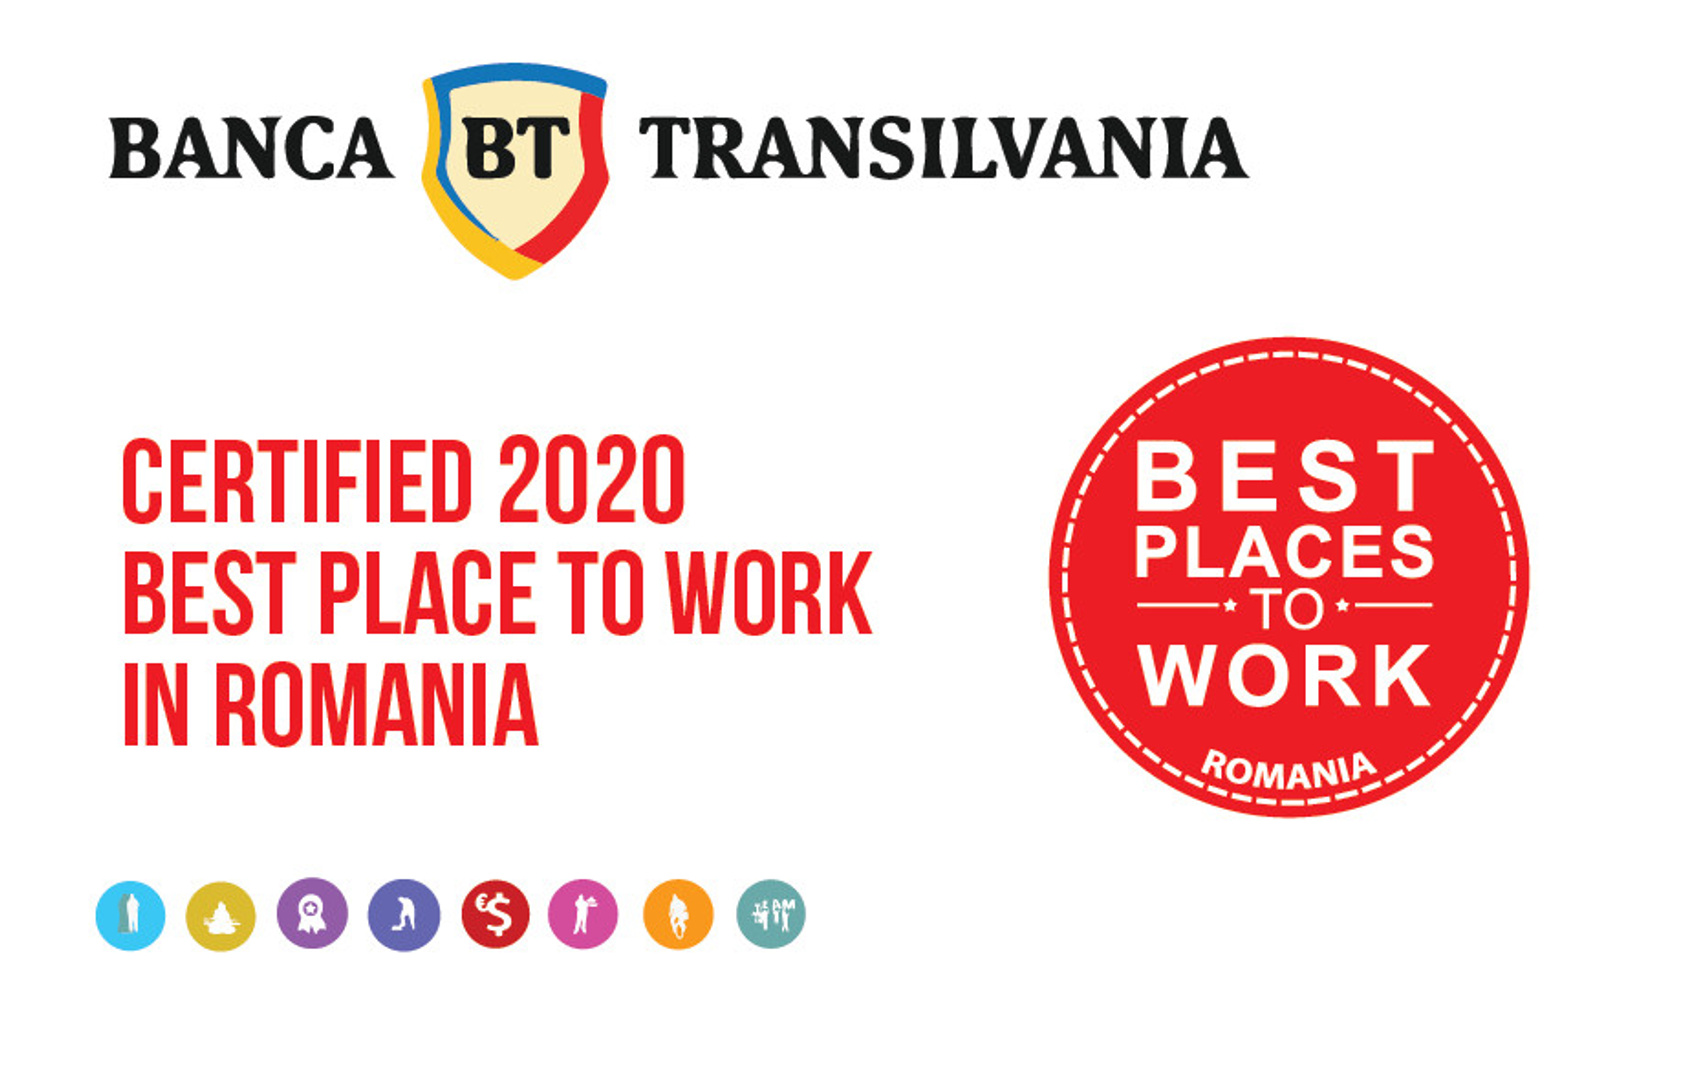 BPTW Romania Signature - Banca transaliviana romania 2020